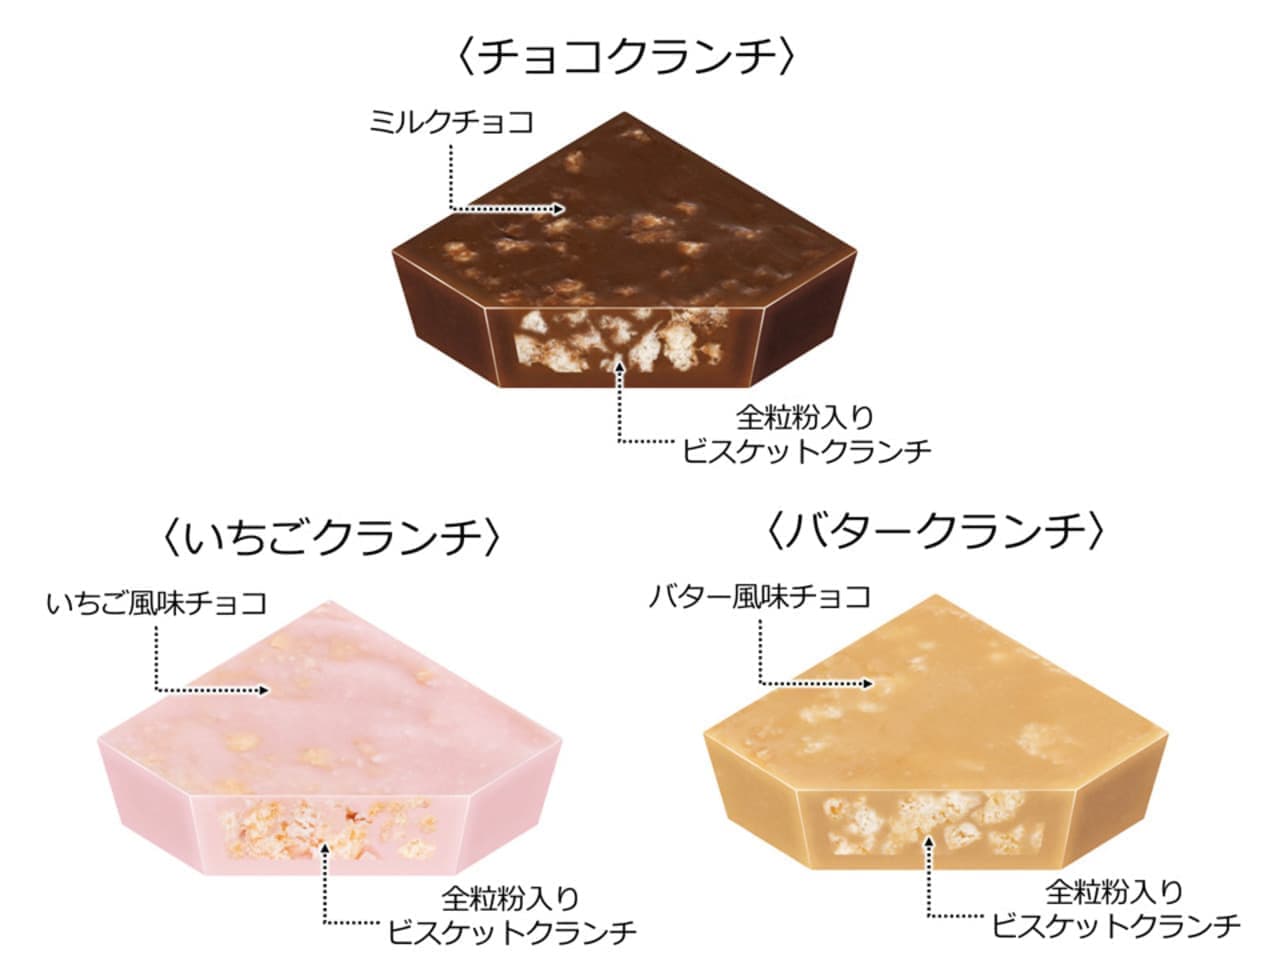 Chirorucoco "Chirorucoco [Three Kinds of Chocolate Crunch]".